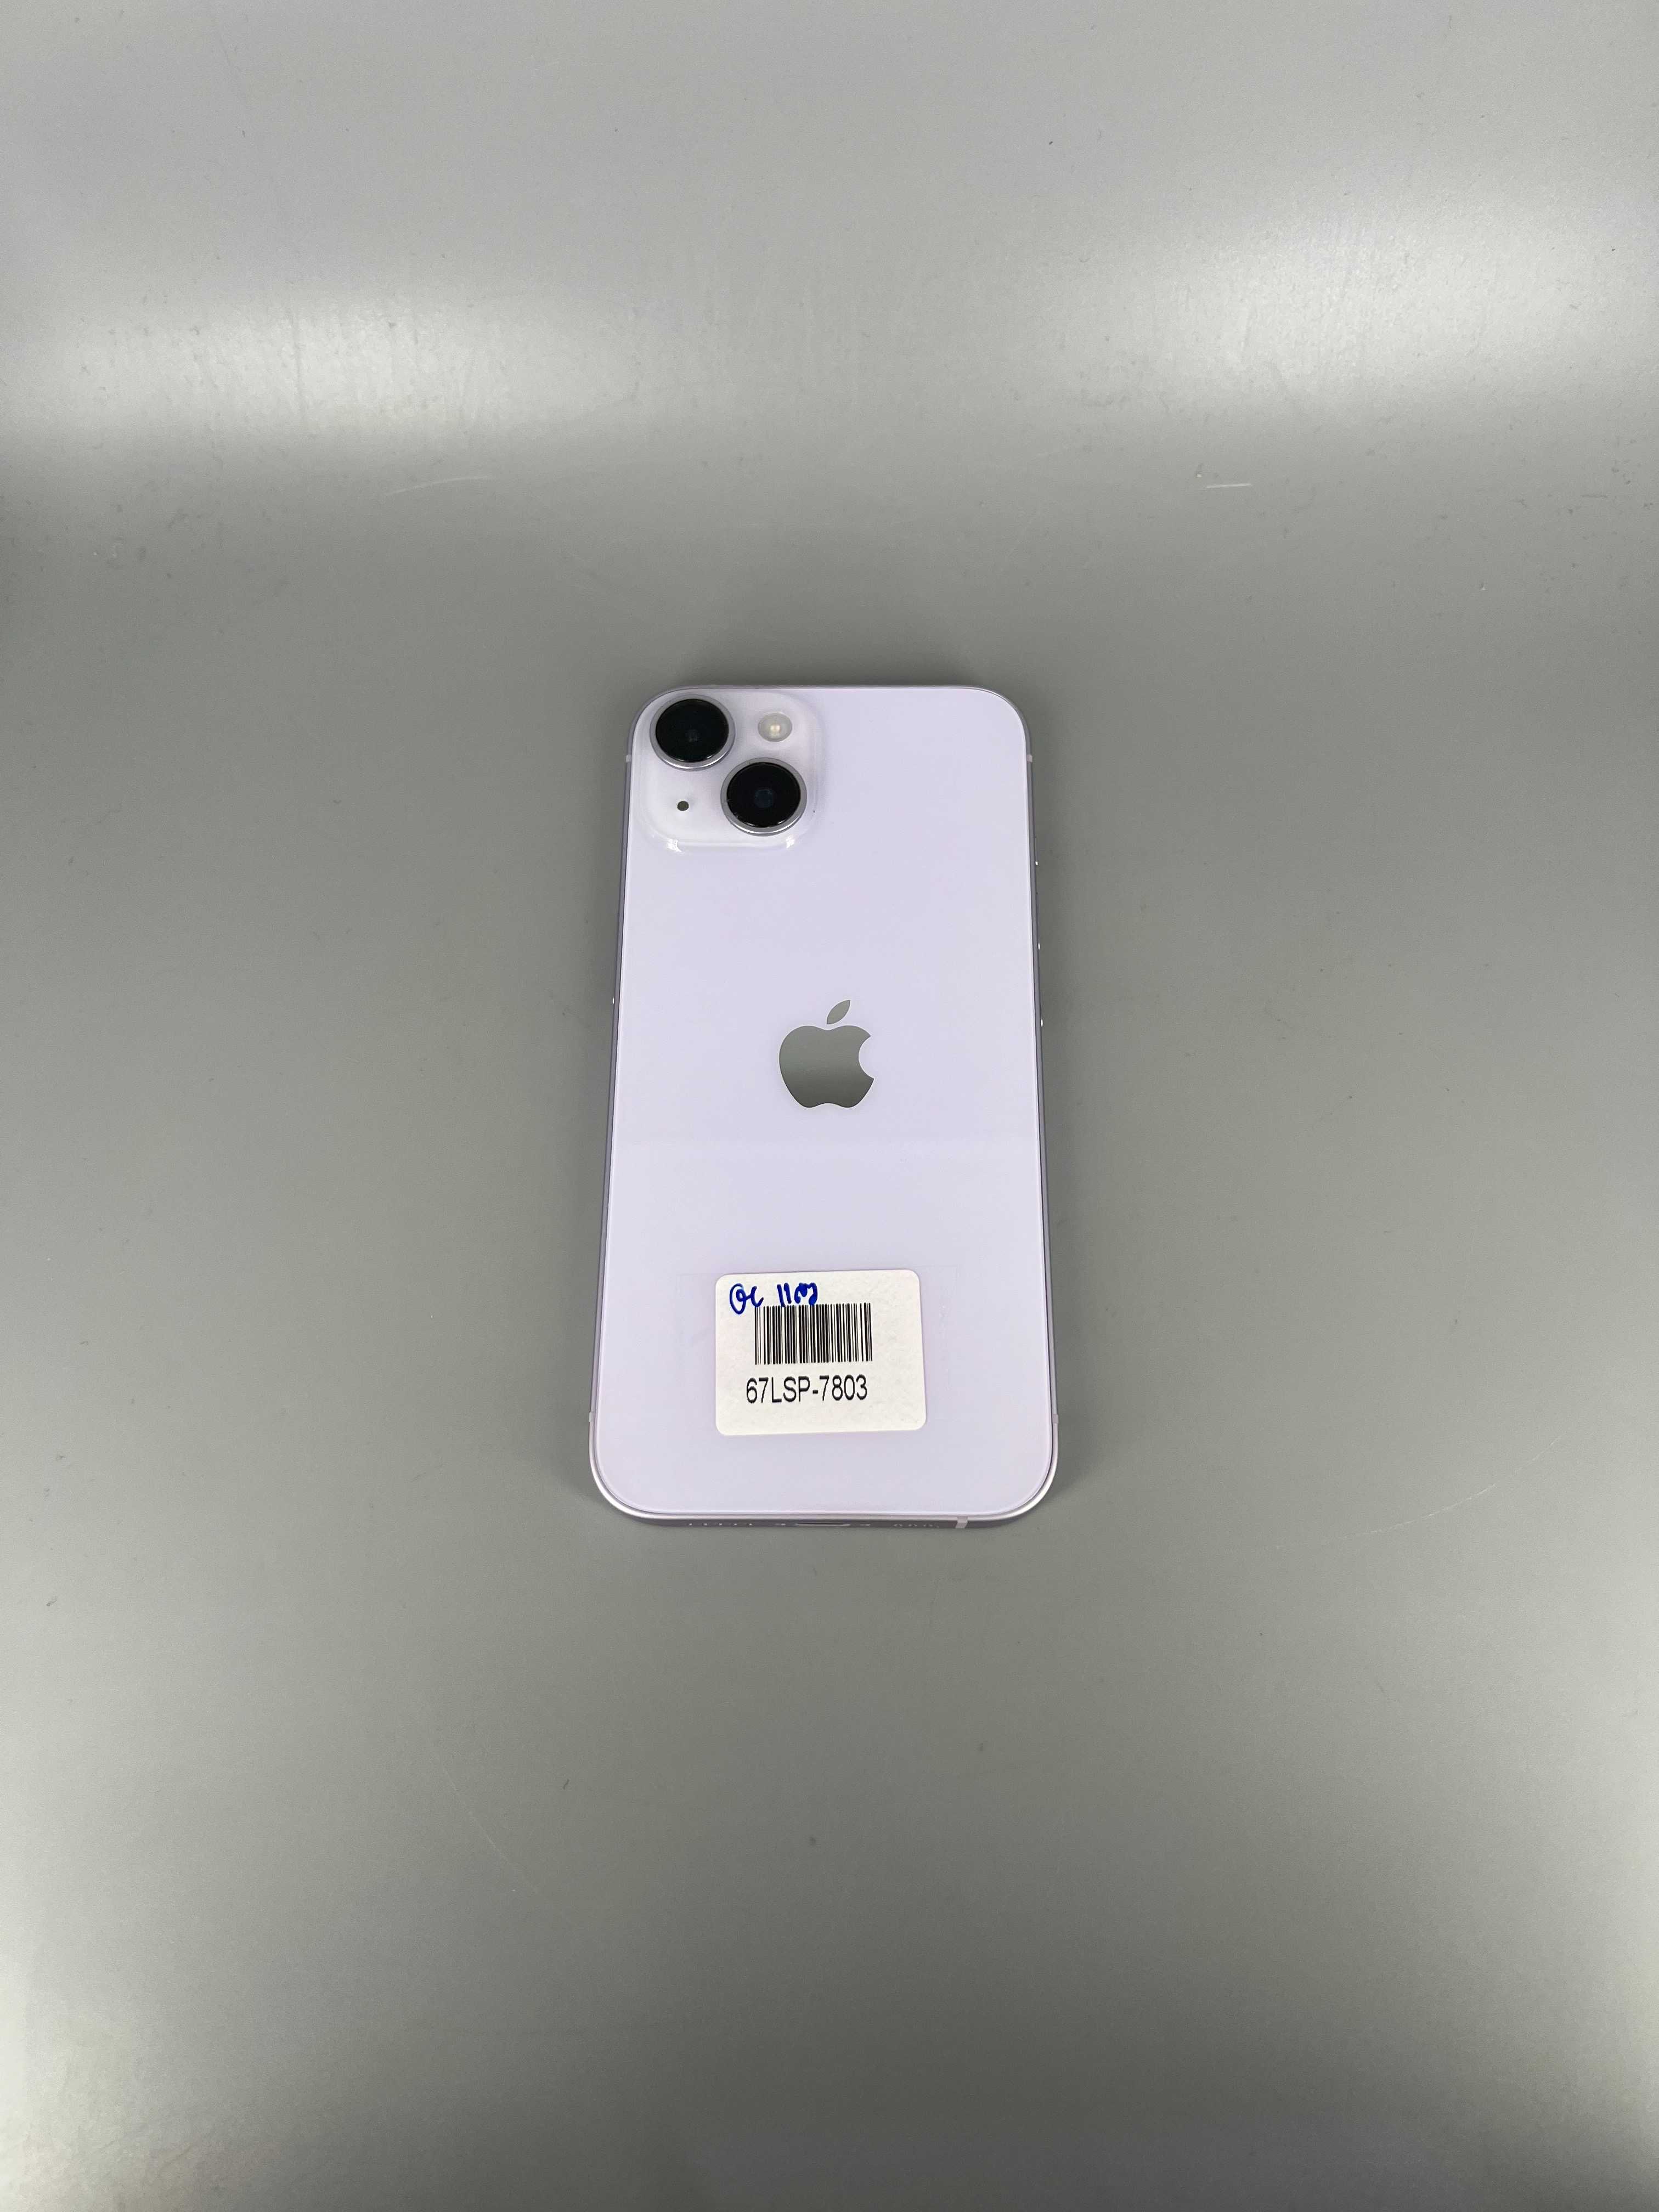 Used iPhone 14 128GB Purple 67LSP-7803